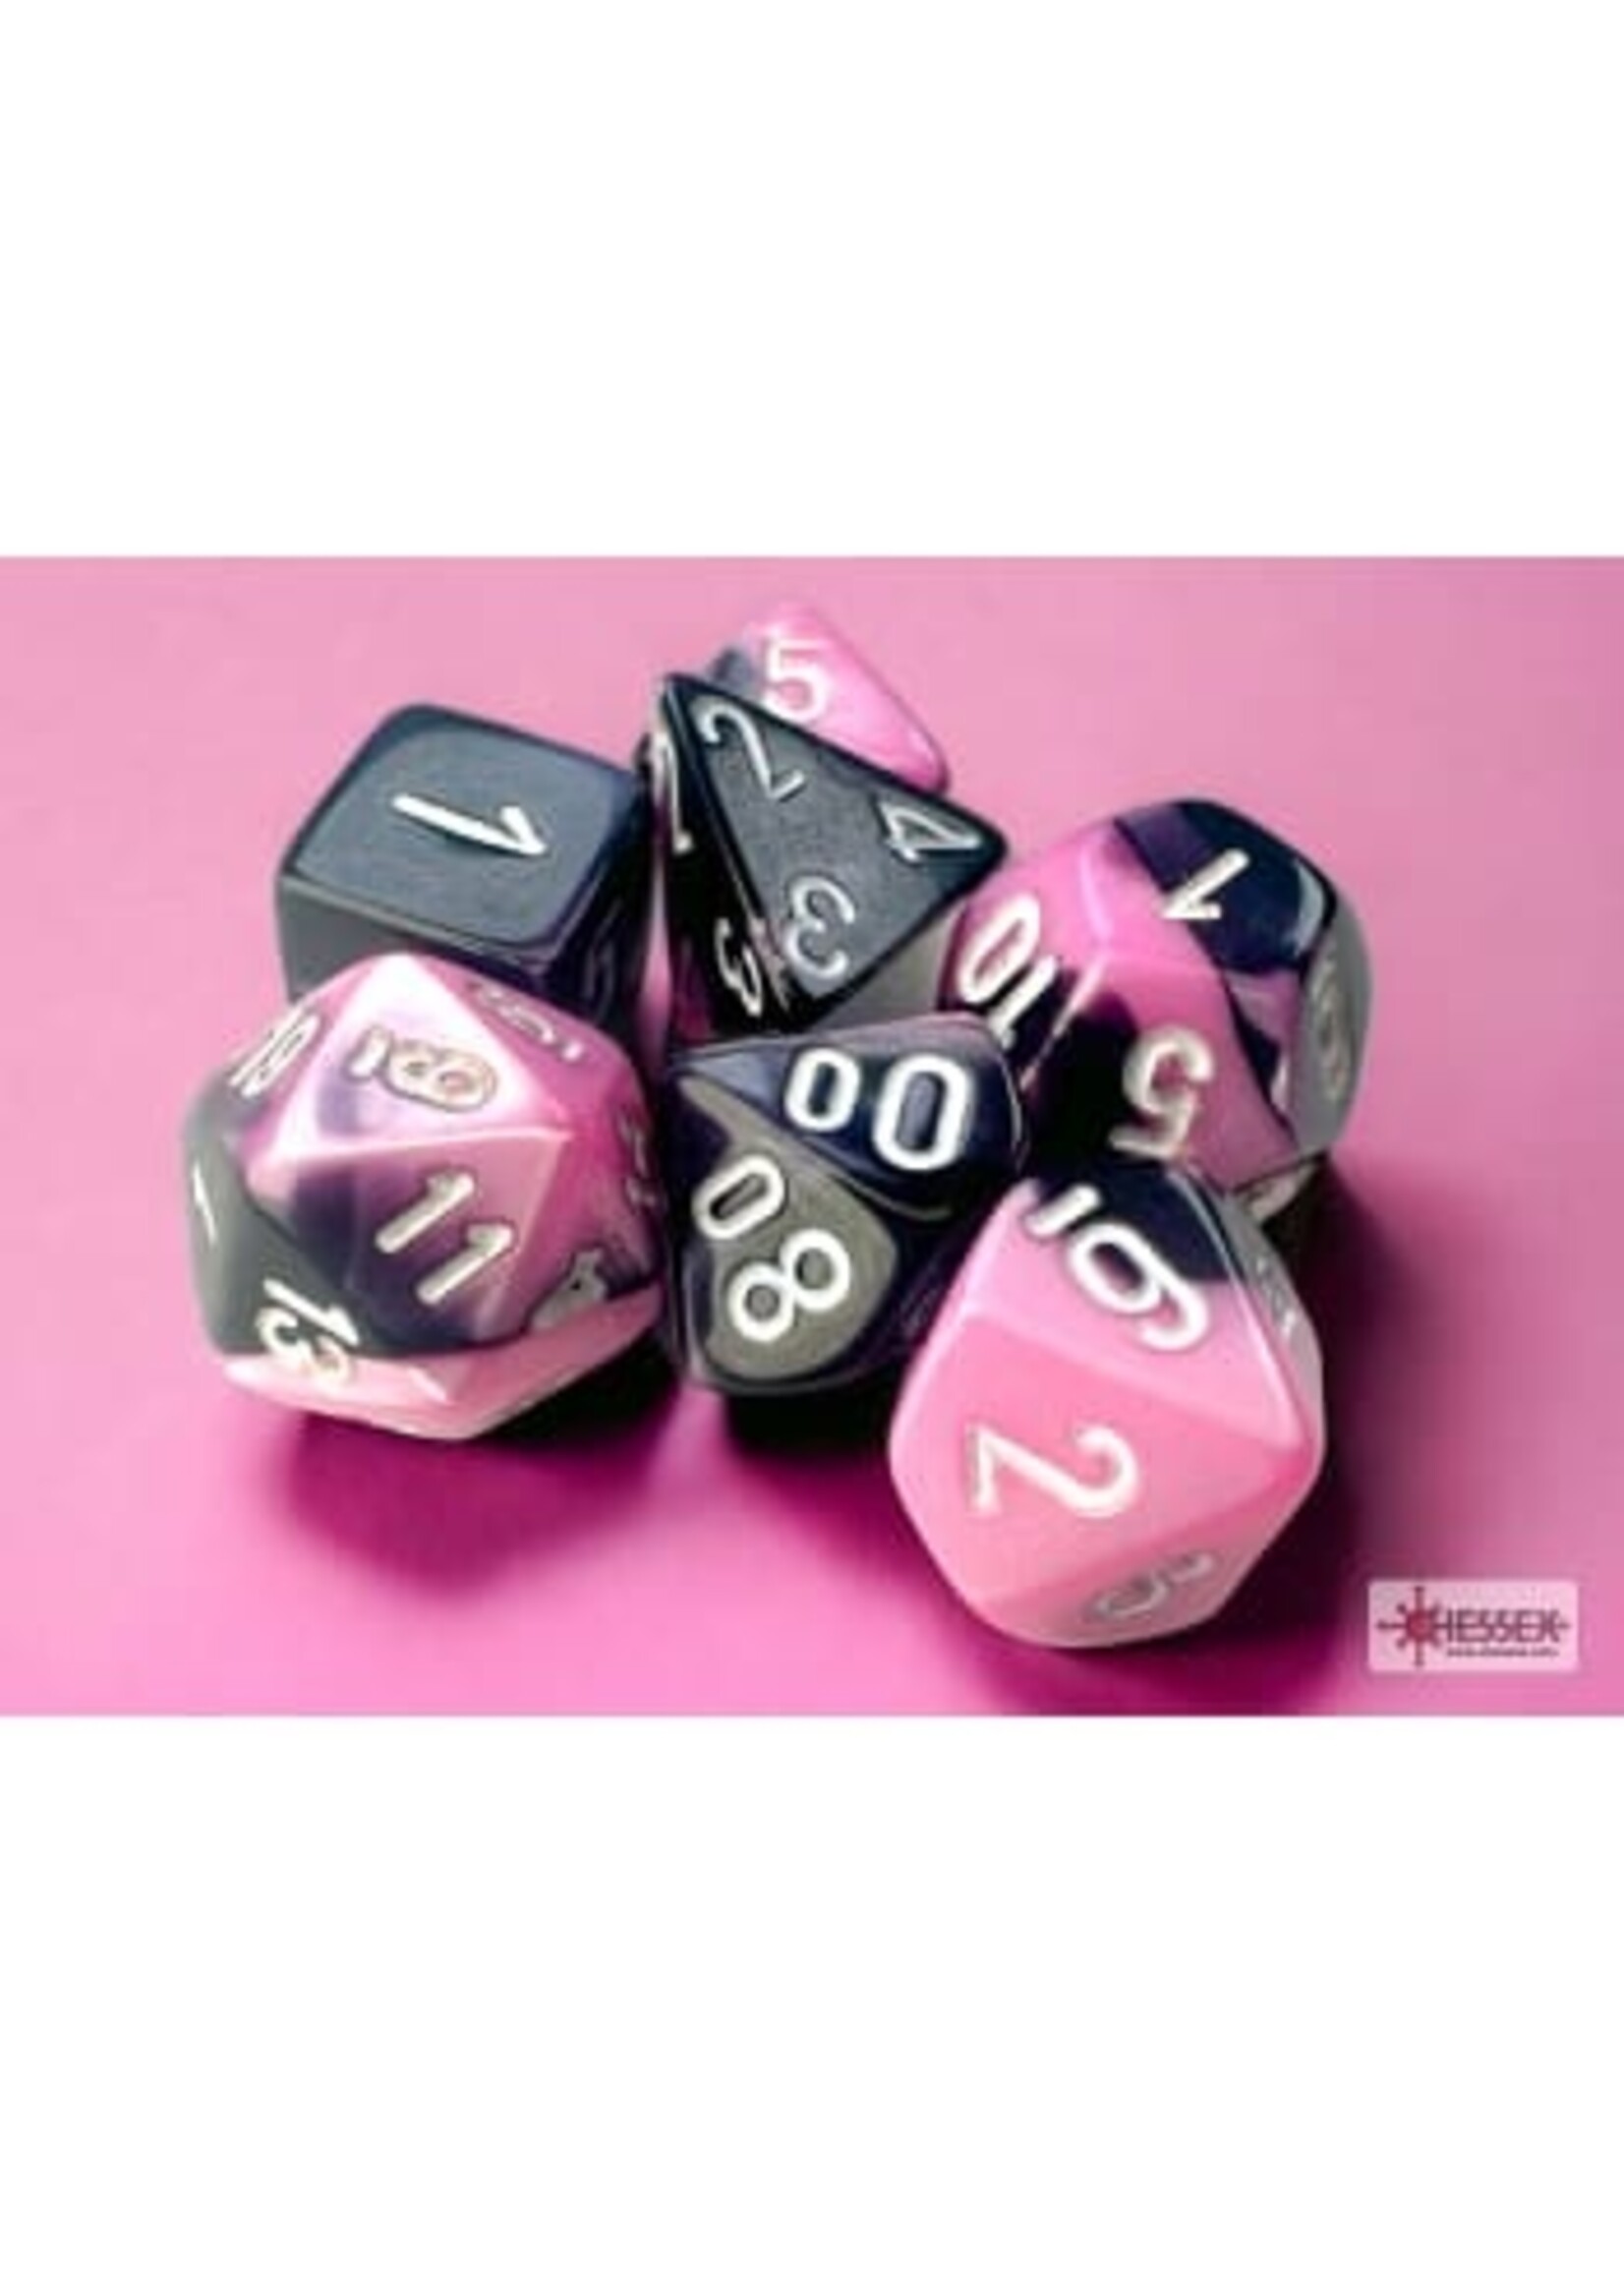 Chessex Gemini Mini 7 Set: Black & Pink w/ white